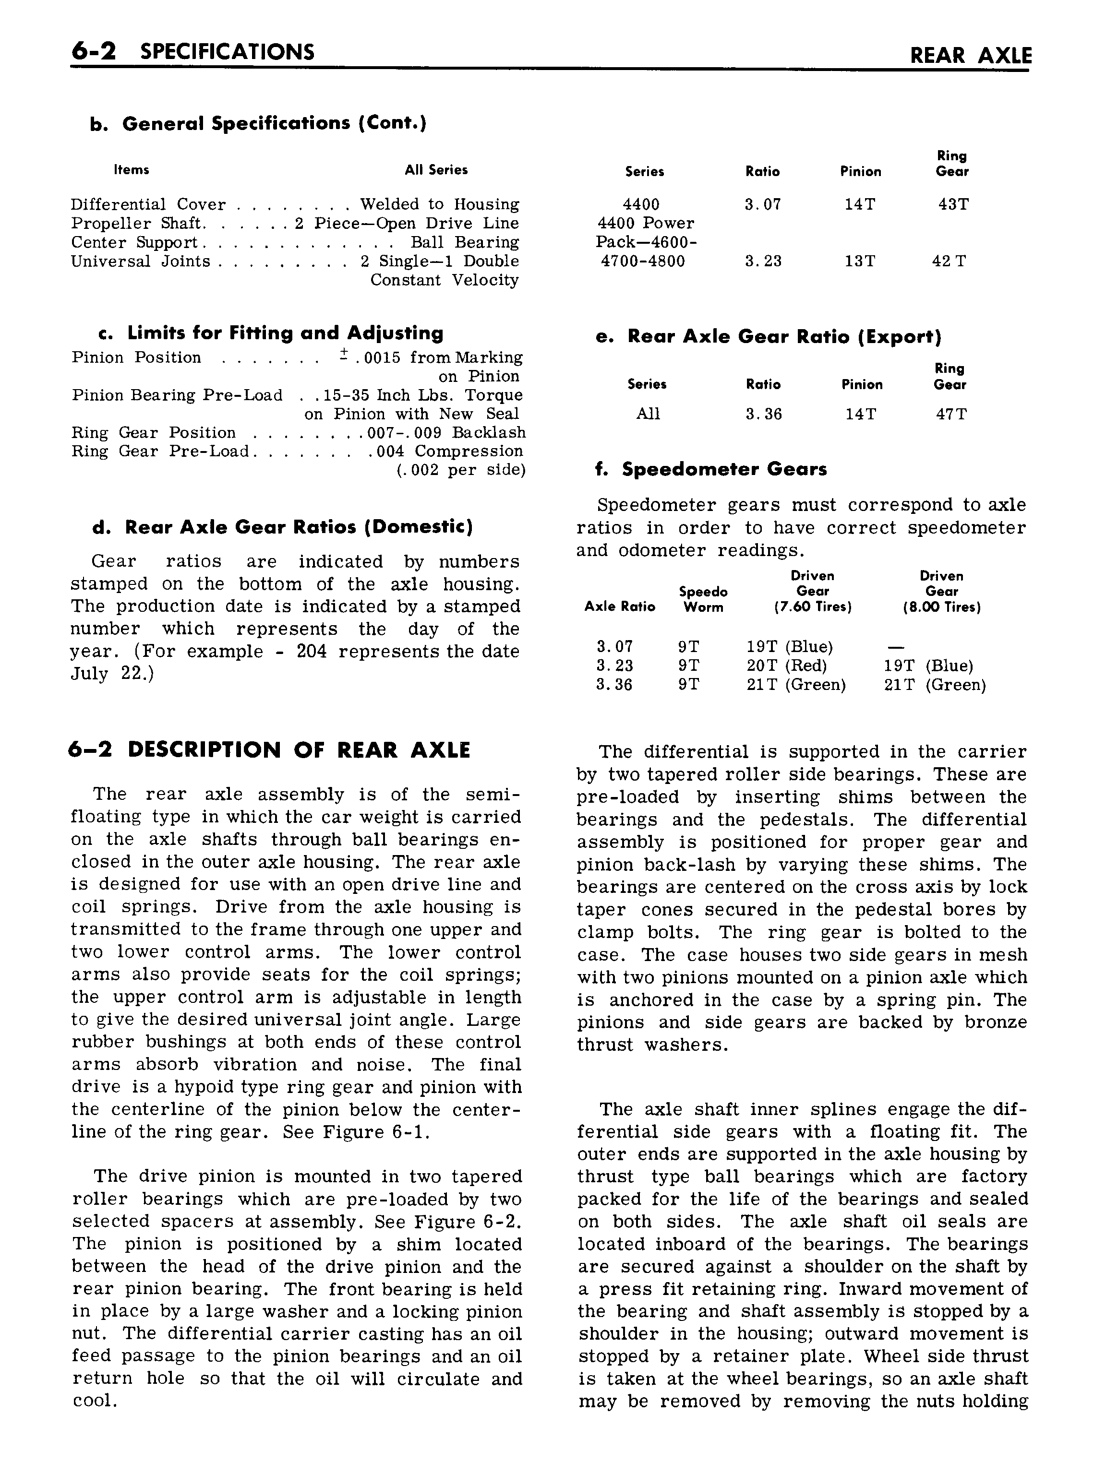 n_06 1961 Buick Shop Manual - Rear Axle-002-002.jpg